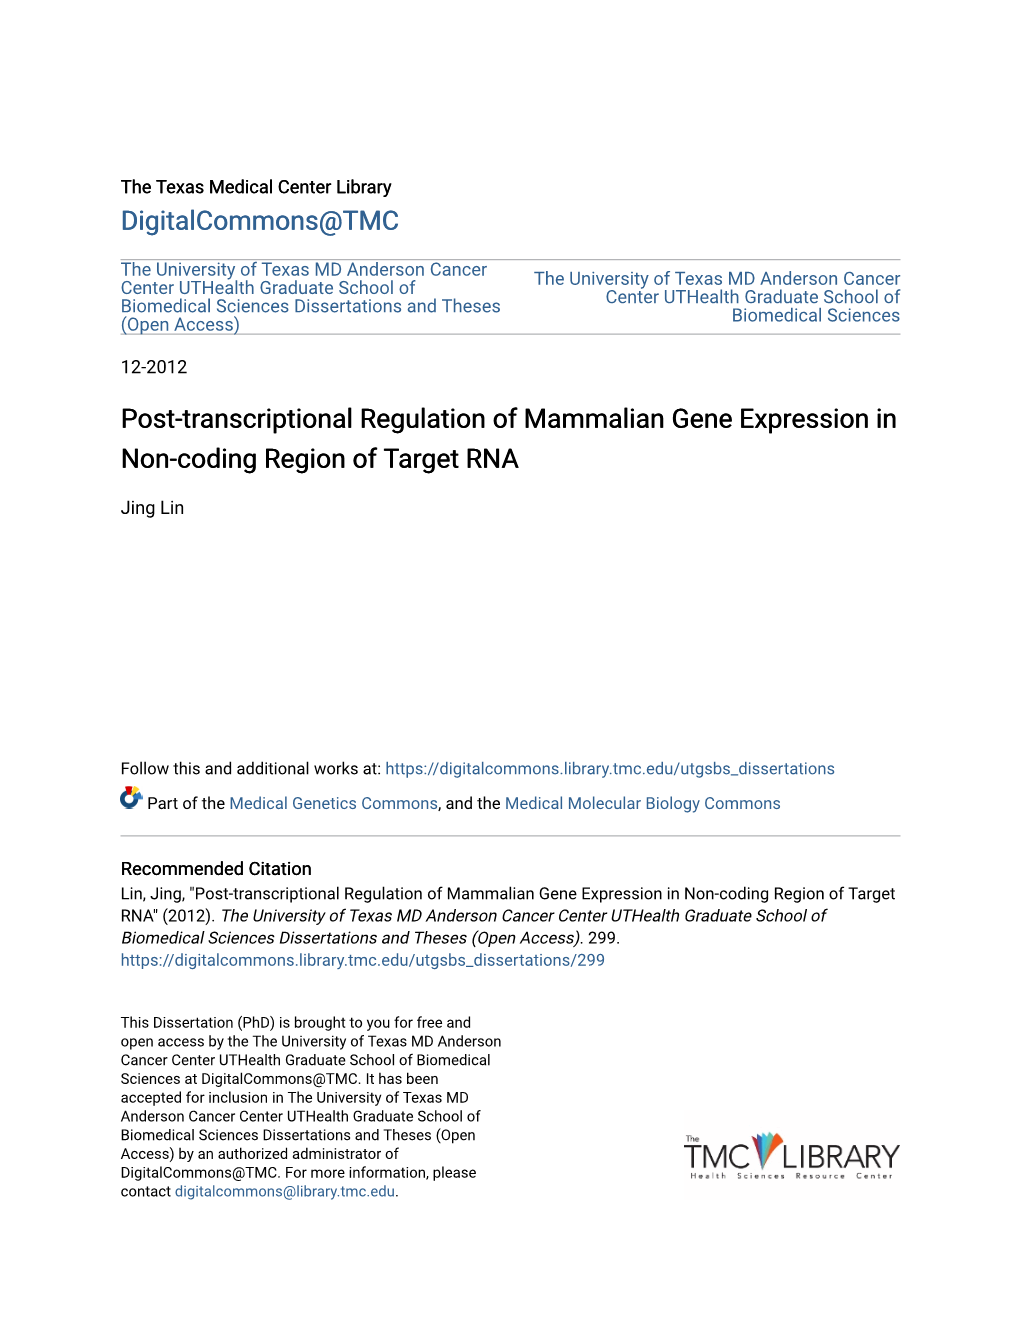 Post-Transcriptional Regulation of Mammalian Gene Expression in Non-Coding Region of Target RNA